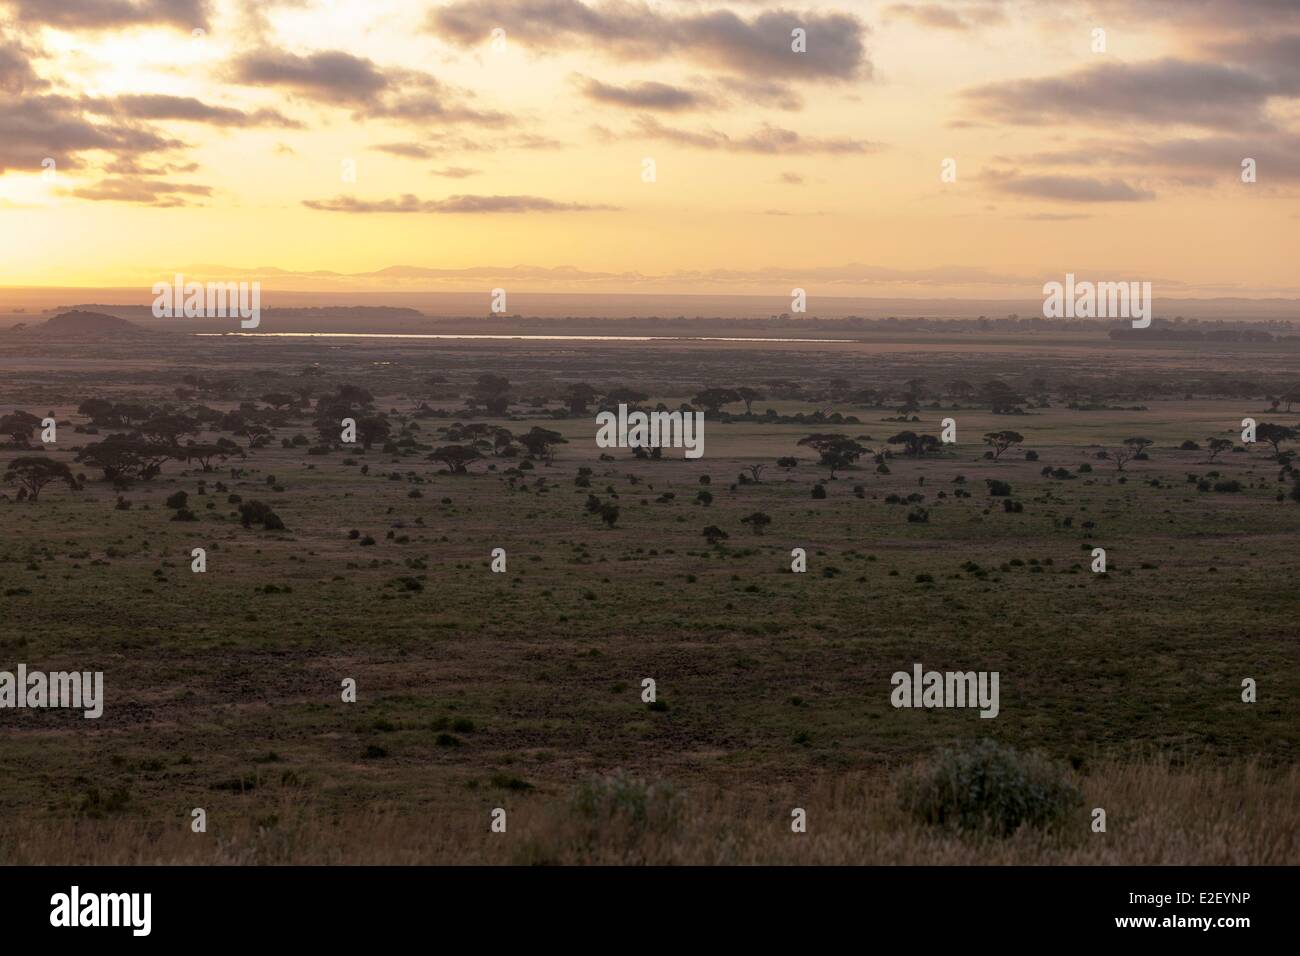 Kenya, Amboseli national park, at dawn (aerial view) Stock Photo